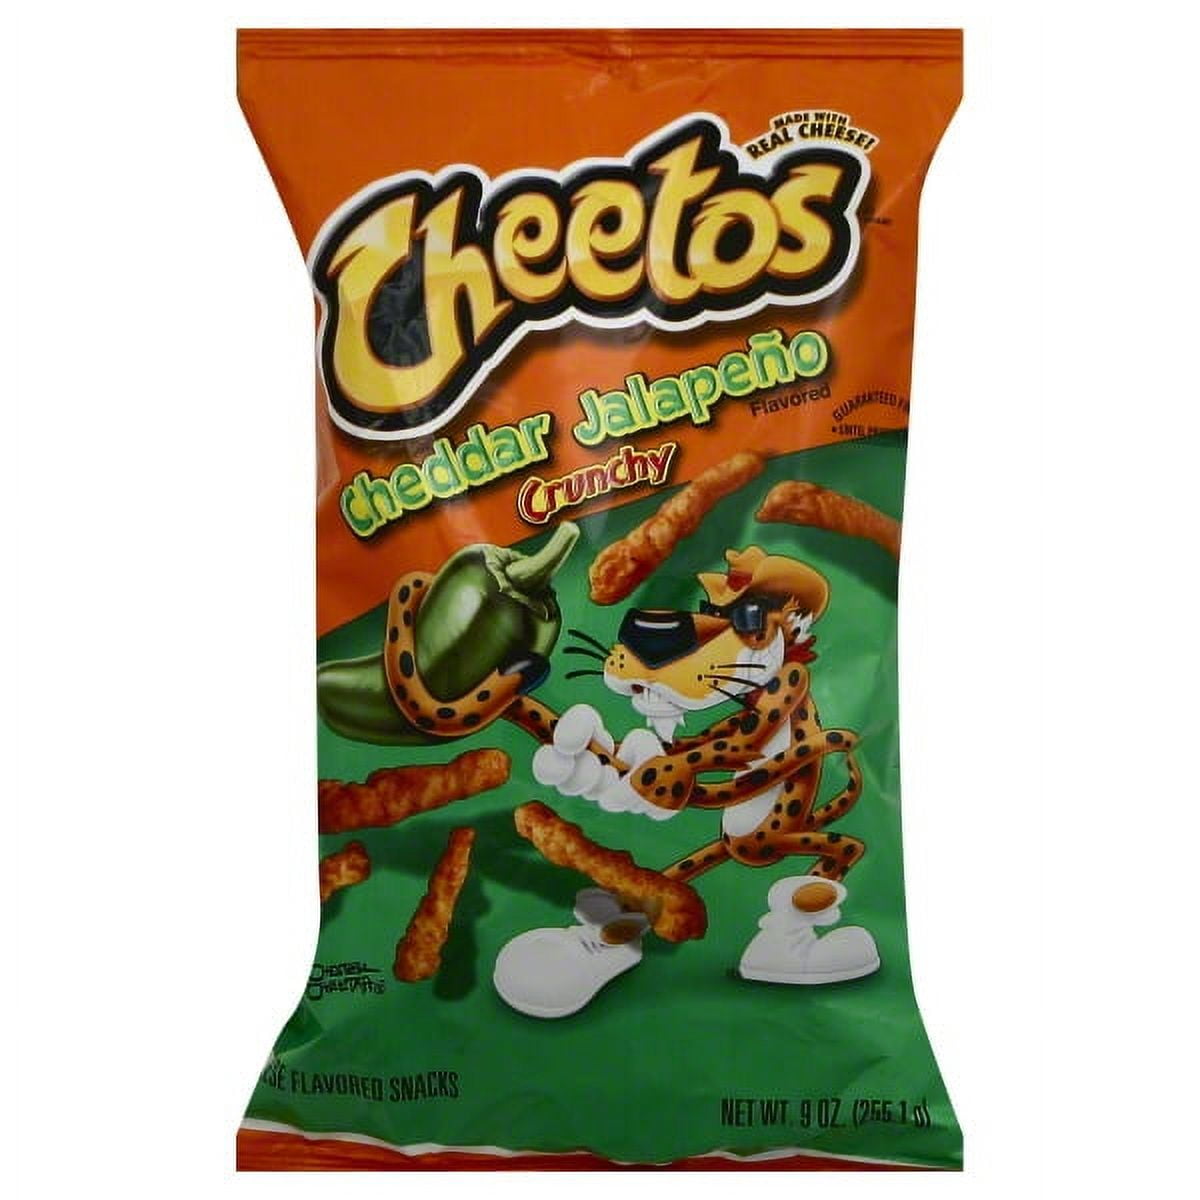 Cheetos CHEETOS CRUNCHY TAPATIO 3.75 OZ, Cheese & Puffed Snacks